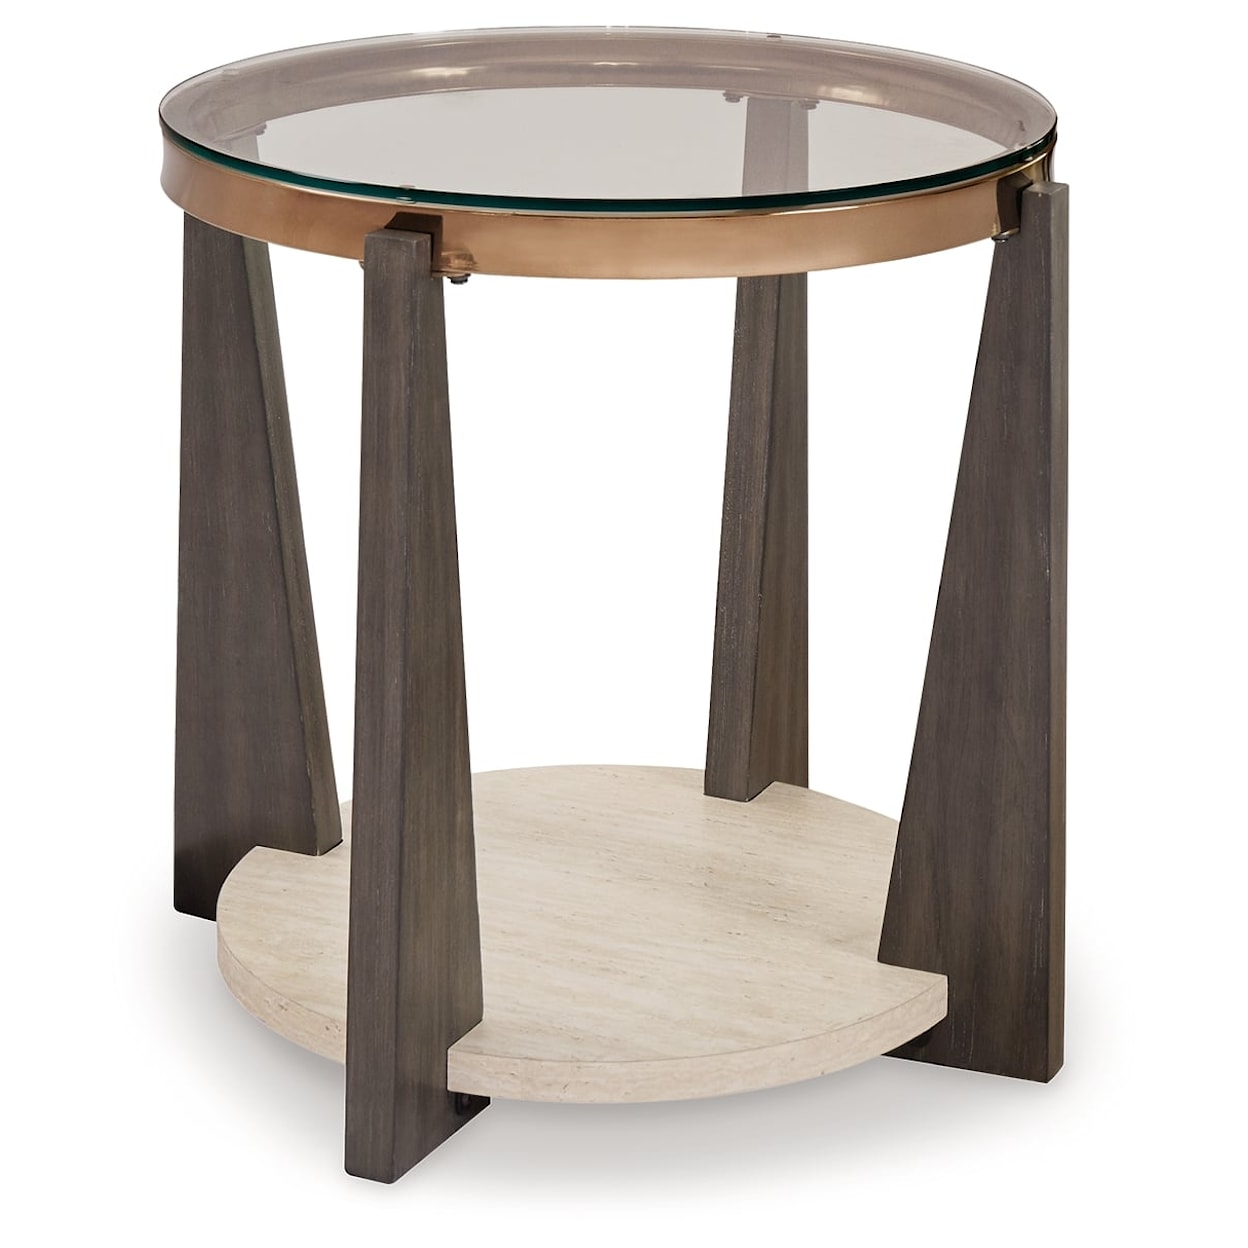 Ashley Furniture Signature Design Frazwa Round End Table